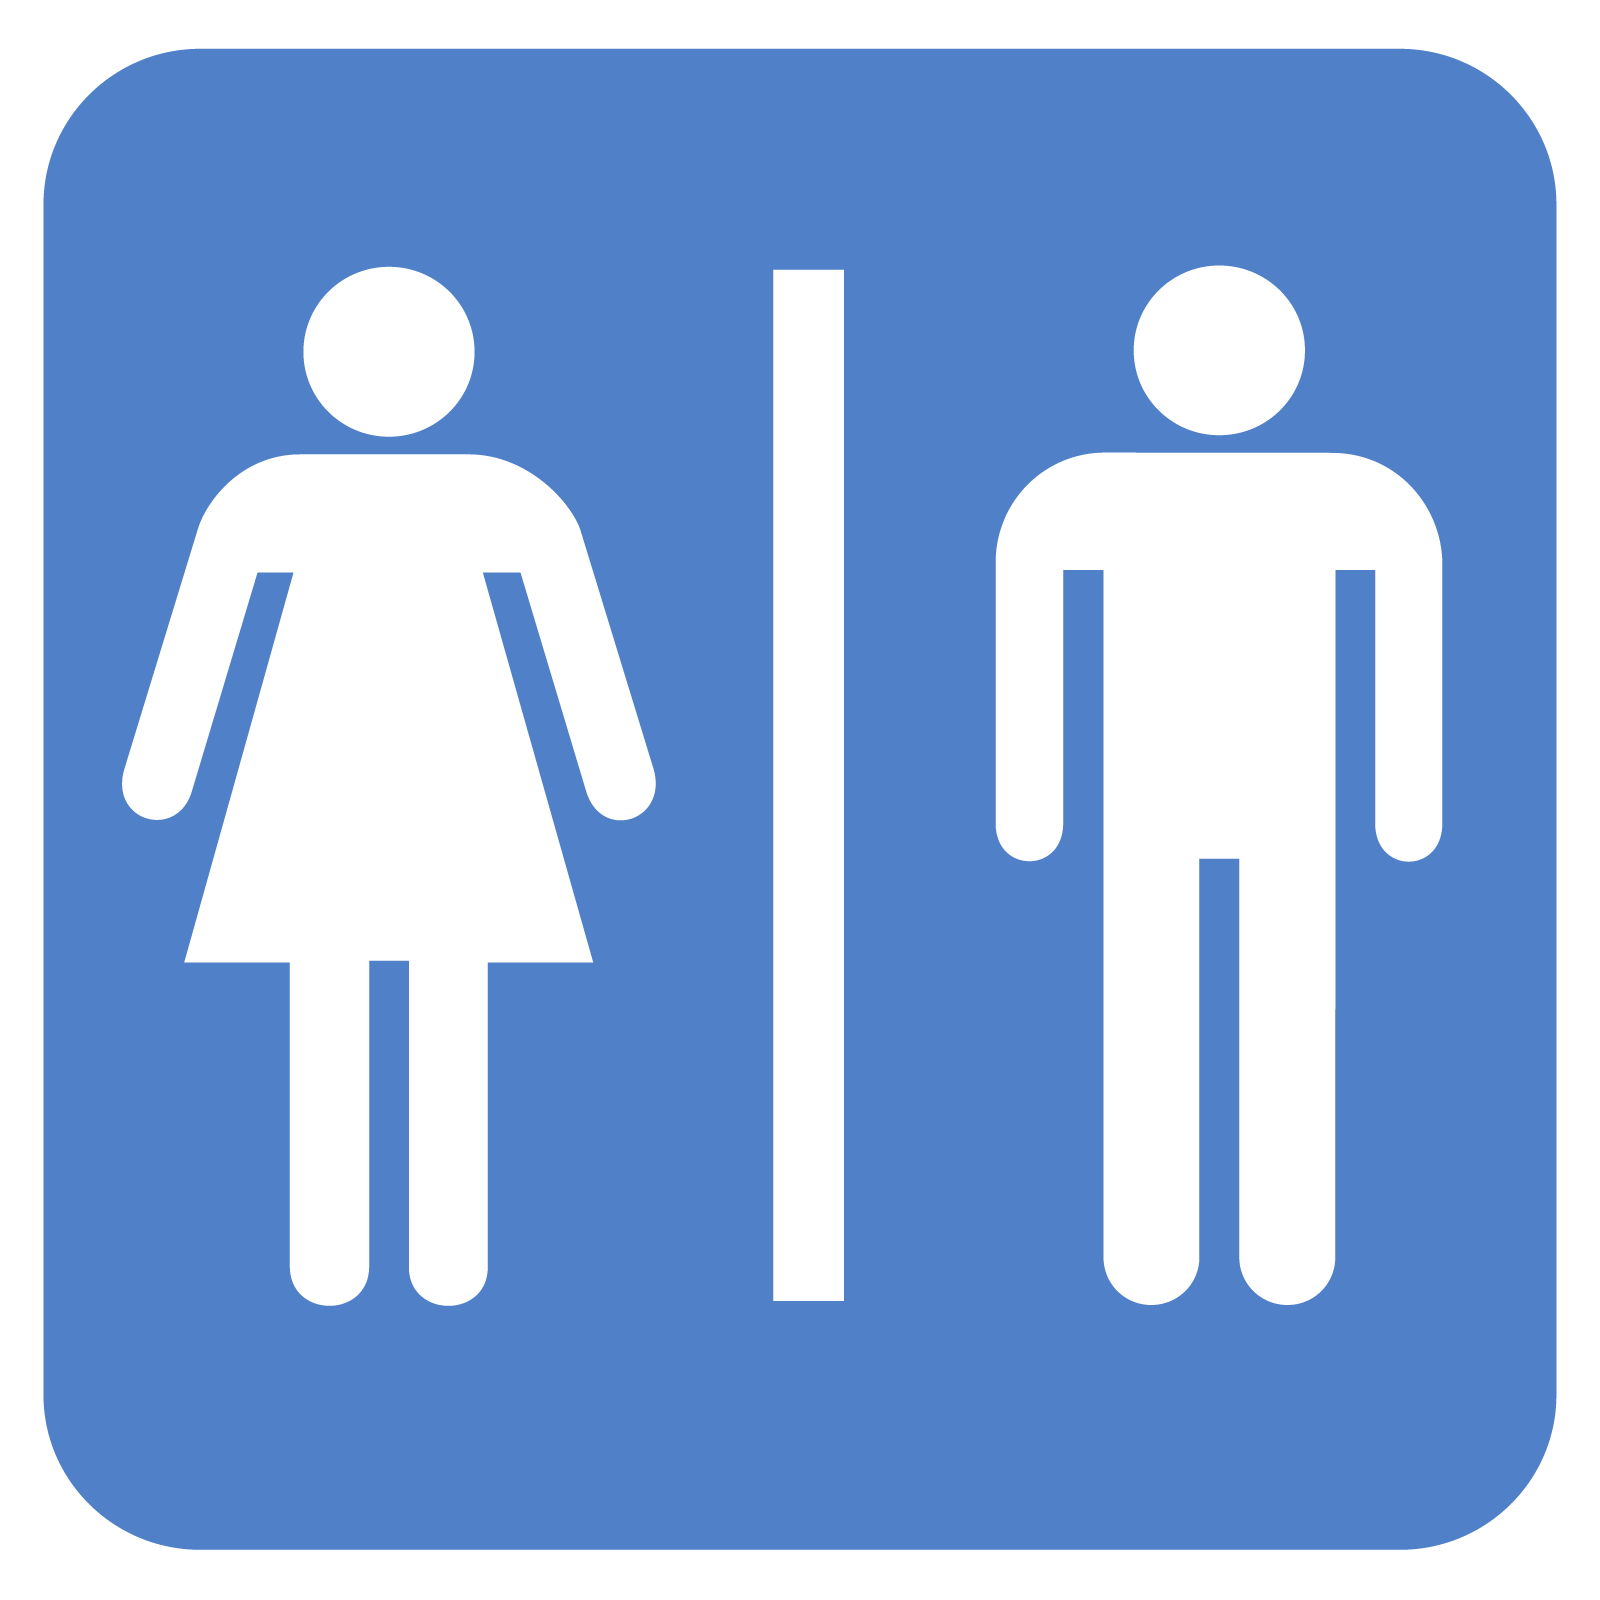 Toilet Sign clip art - vector